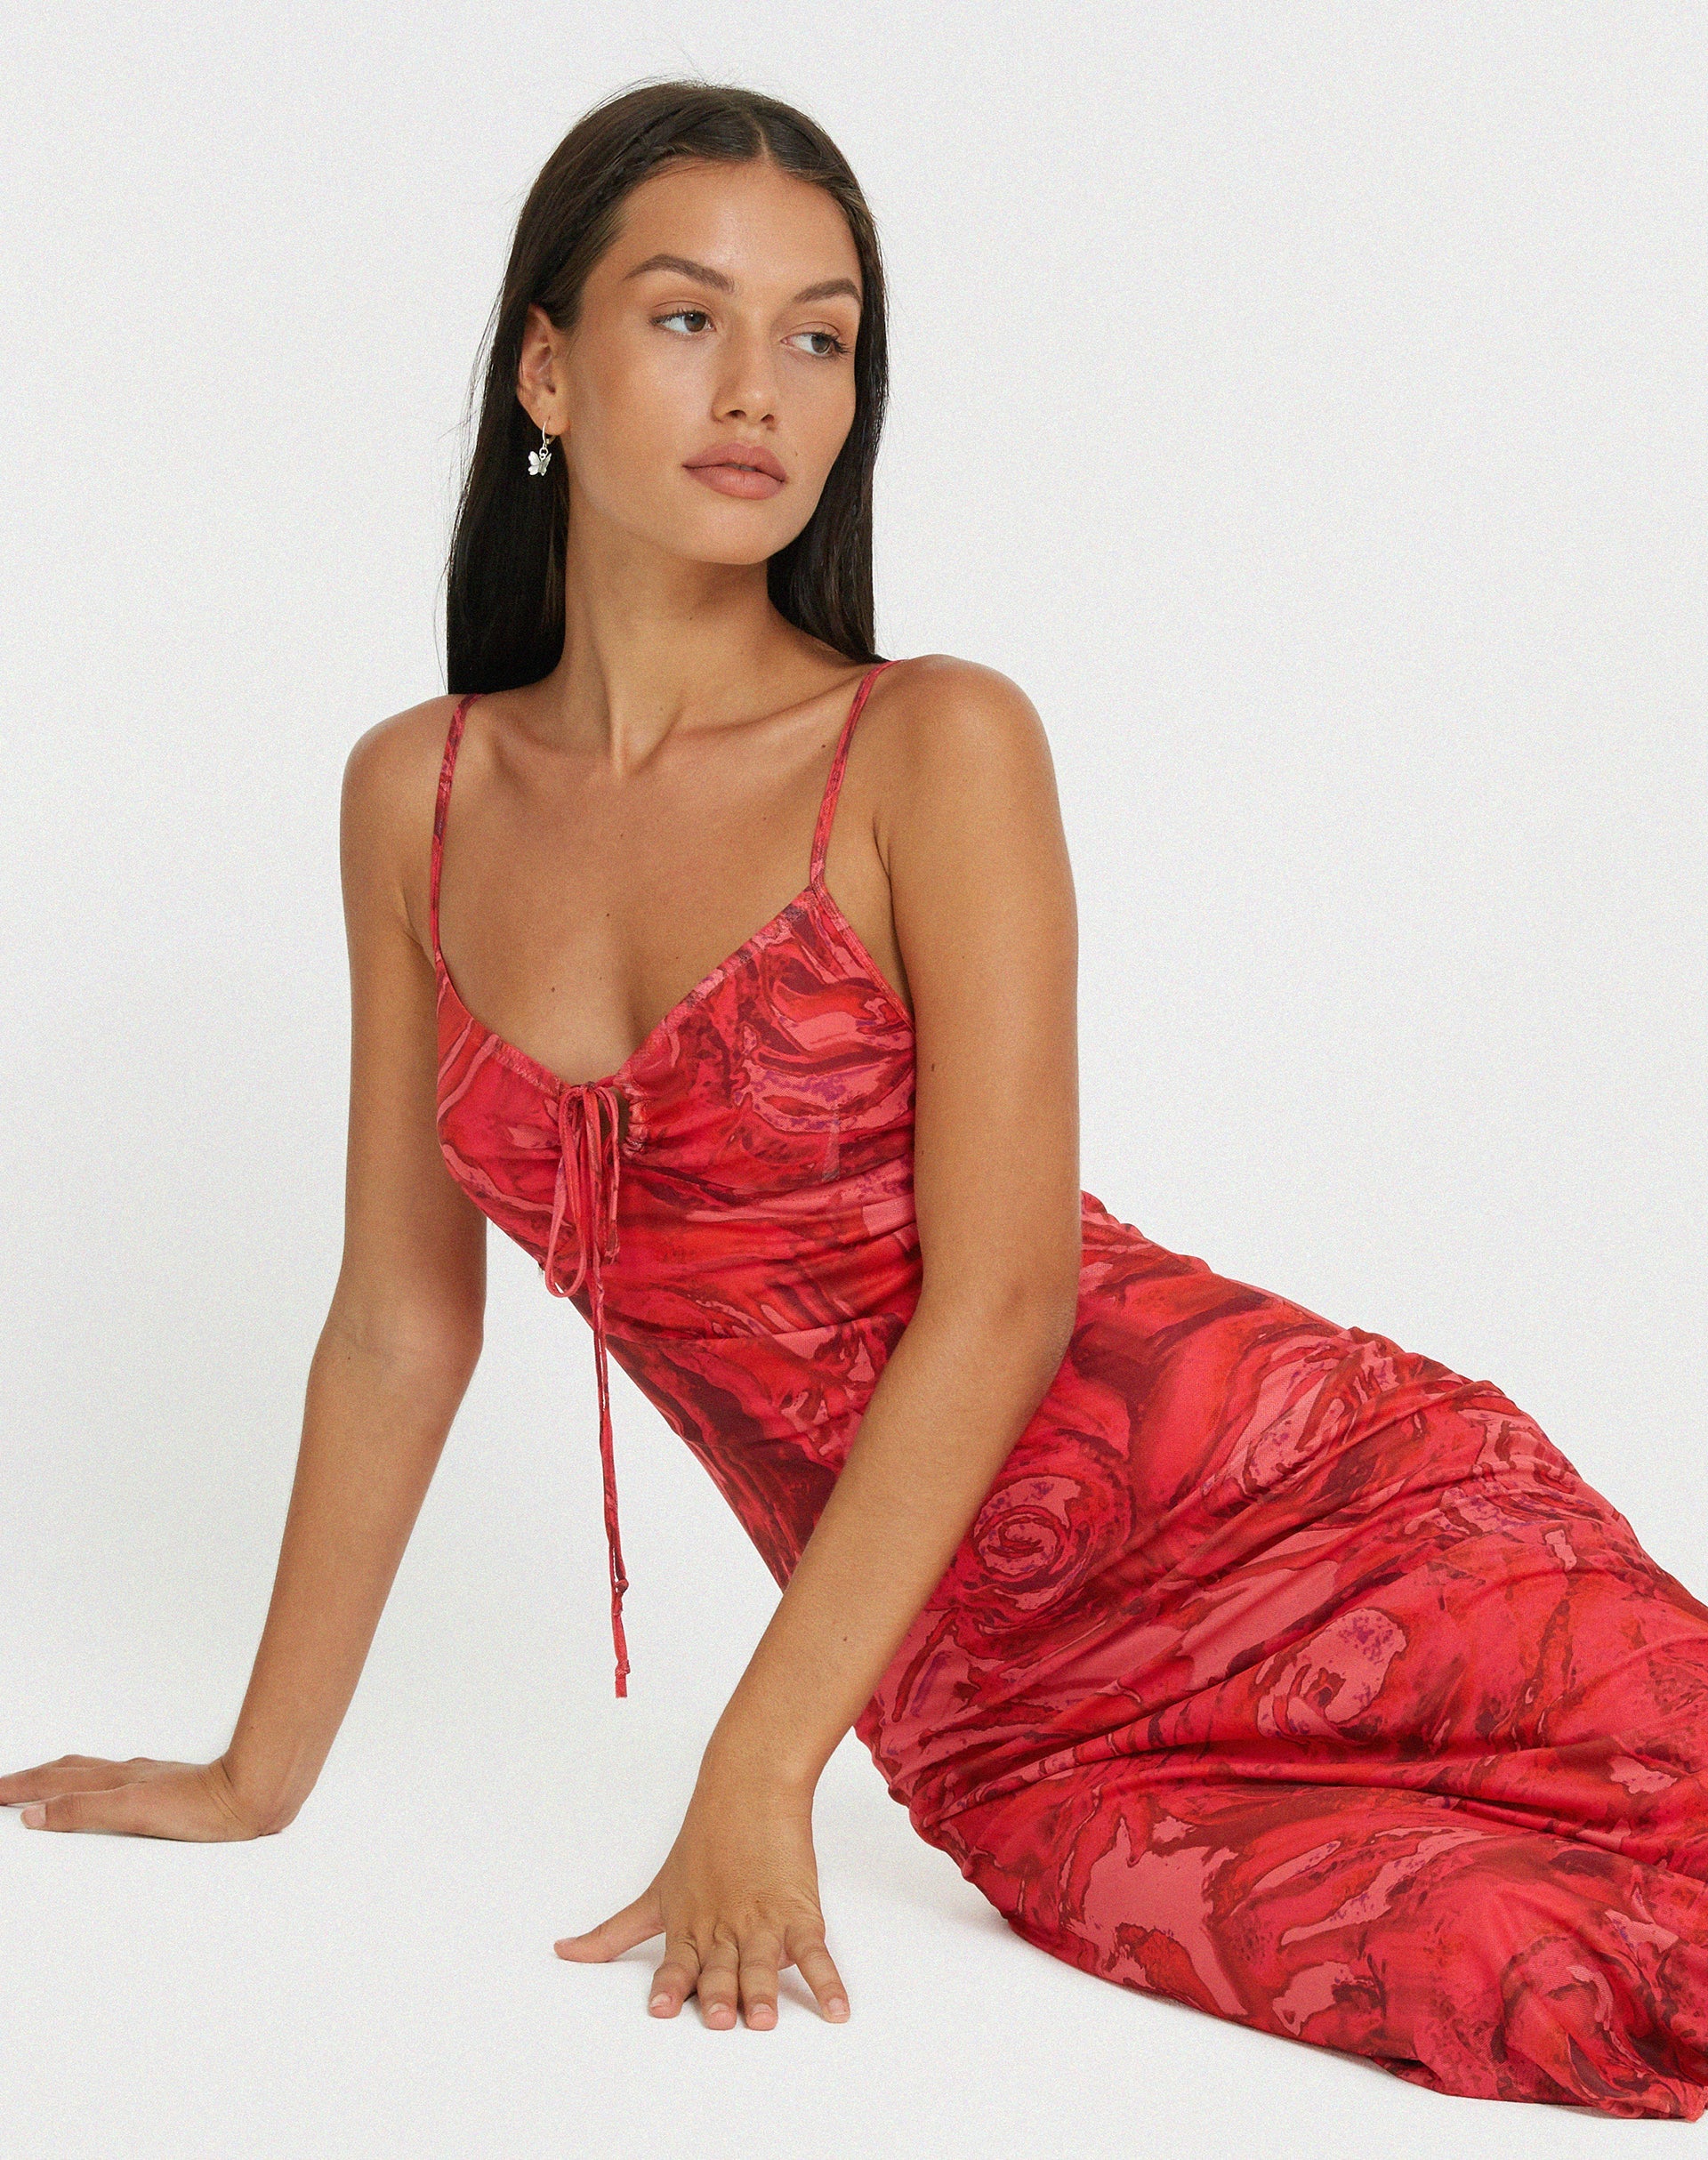 image of Coya Maxi Dress in Rose Petal Red